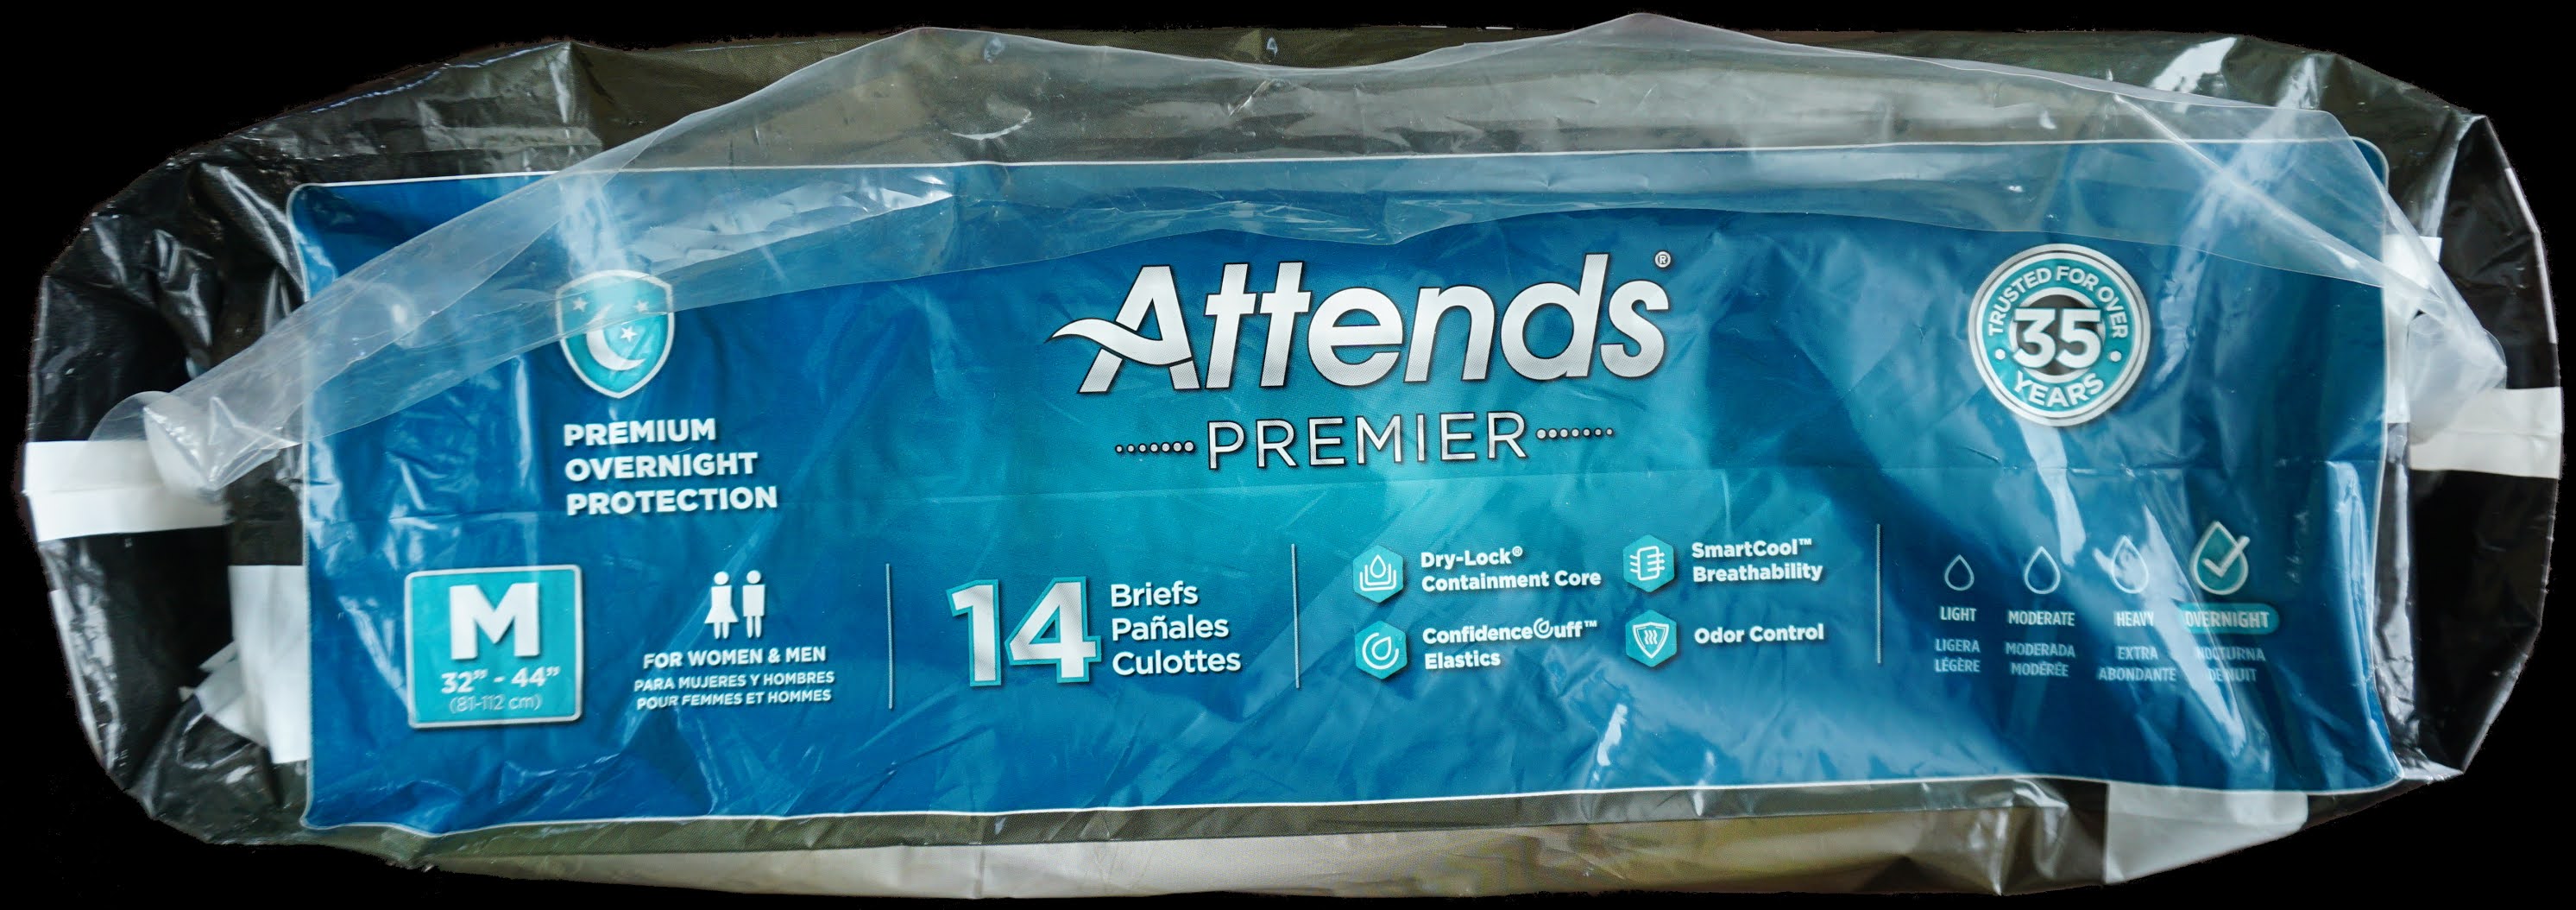 Diaper Metrics: Attends Premier Overnight Adult Diaper Review